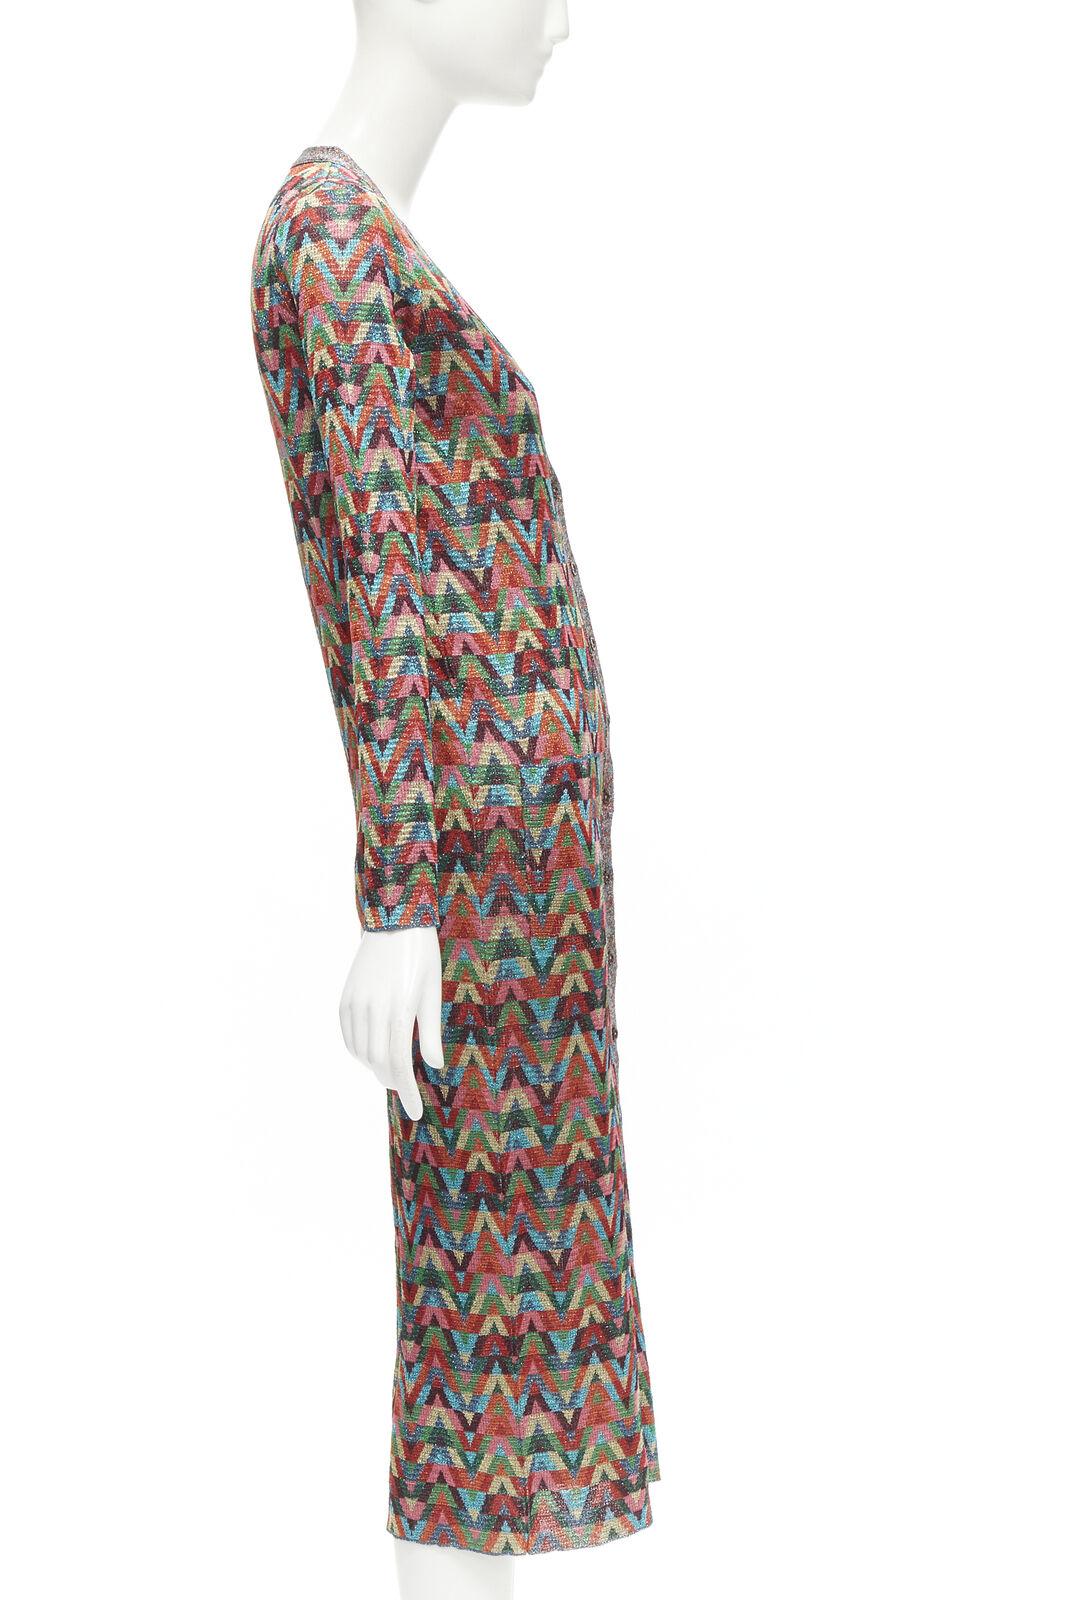 VALENTINO V Optical rainbow metallic lurex graphic long cardigan robe dress XS For Sale 1